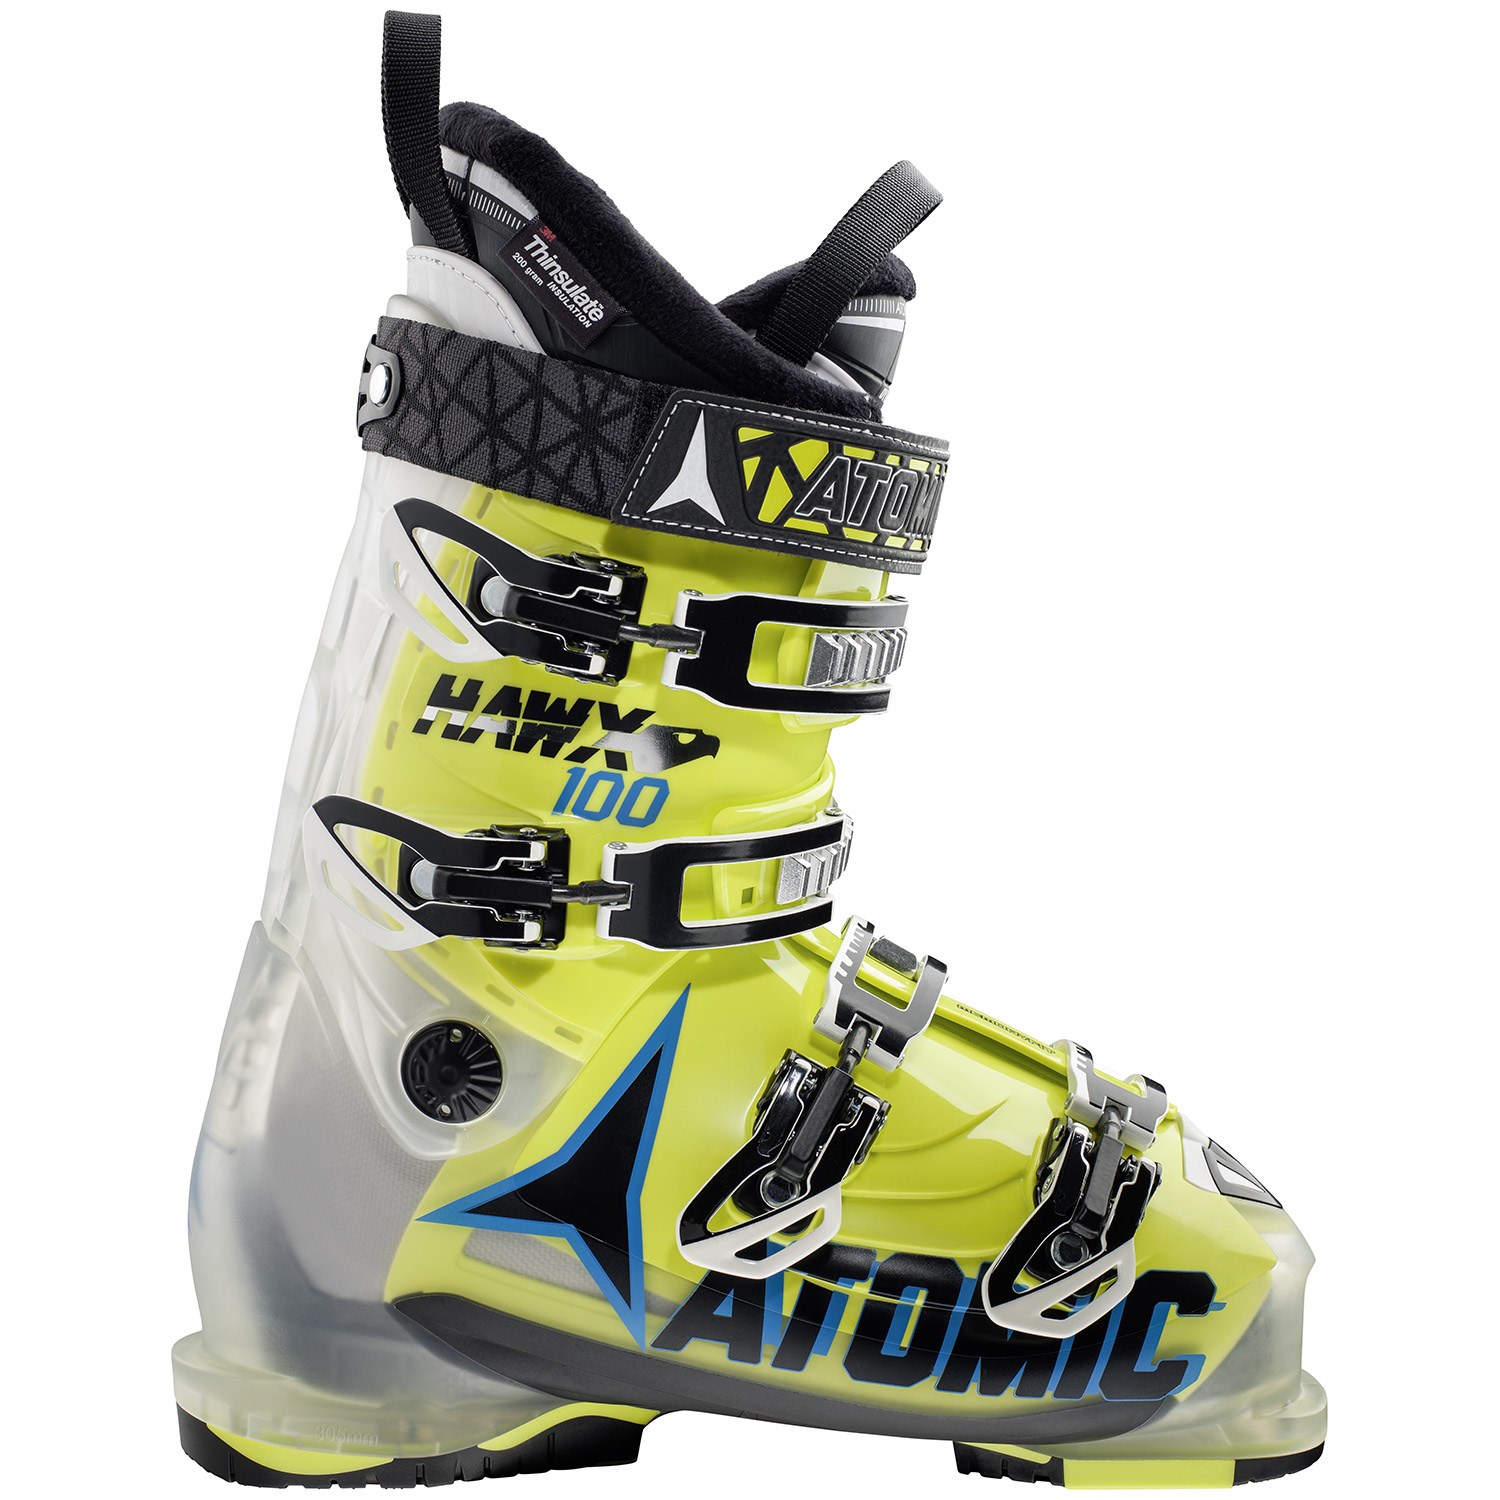 Atomic Hawx 100 Ski Boots 2016 | evo